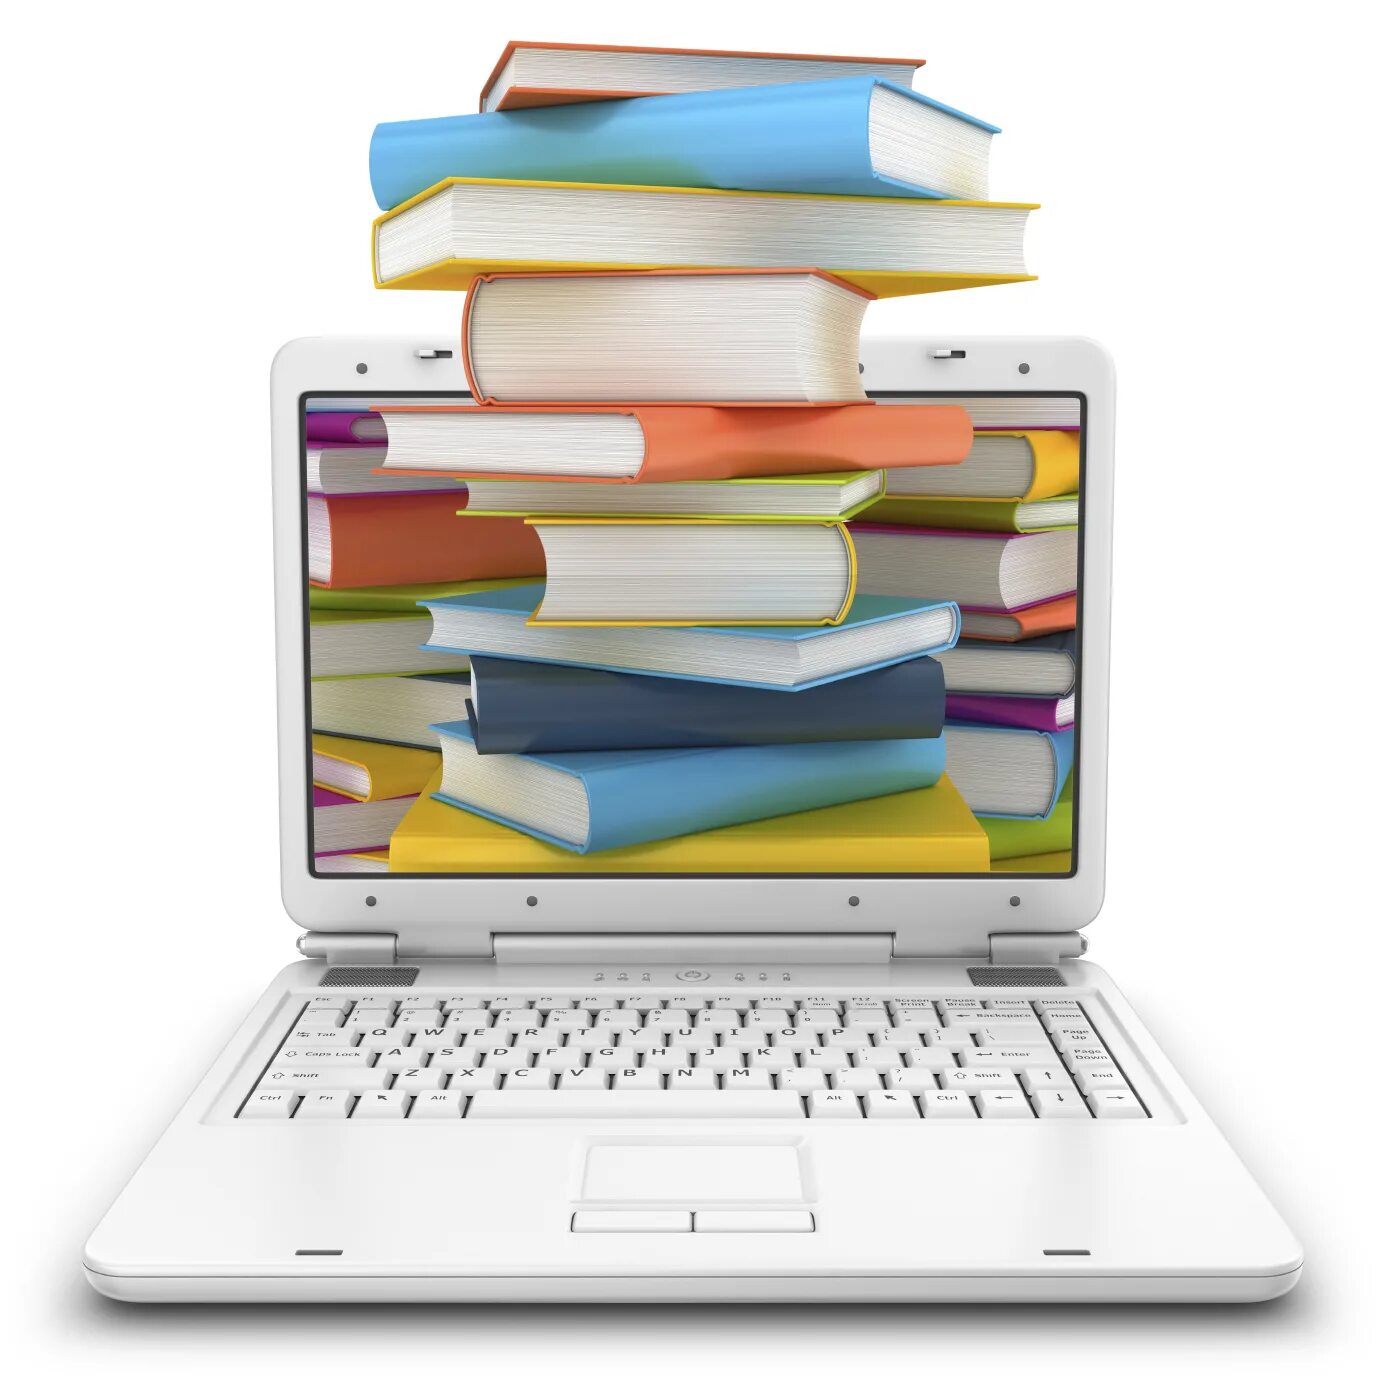 Resource library. Стопка учебников и ноутбук. Книги и компьютер. Компьютер и книги на прозрачном фоне. Книжки и компьютер.